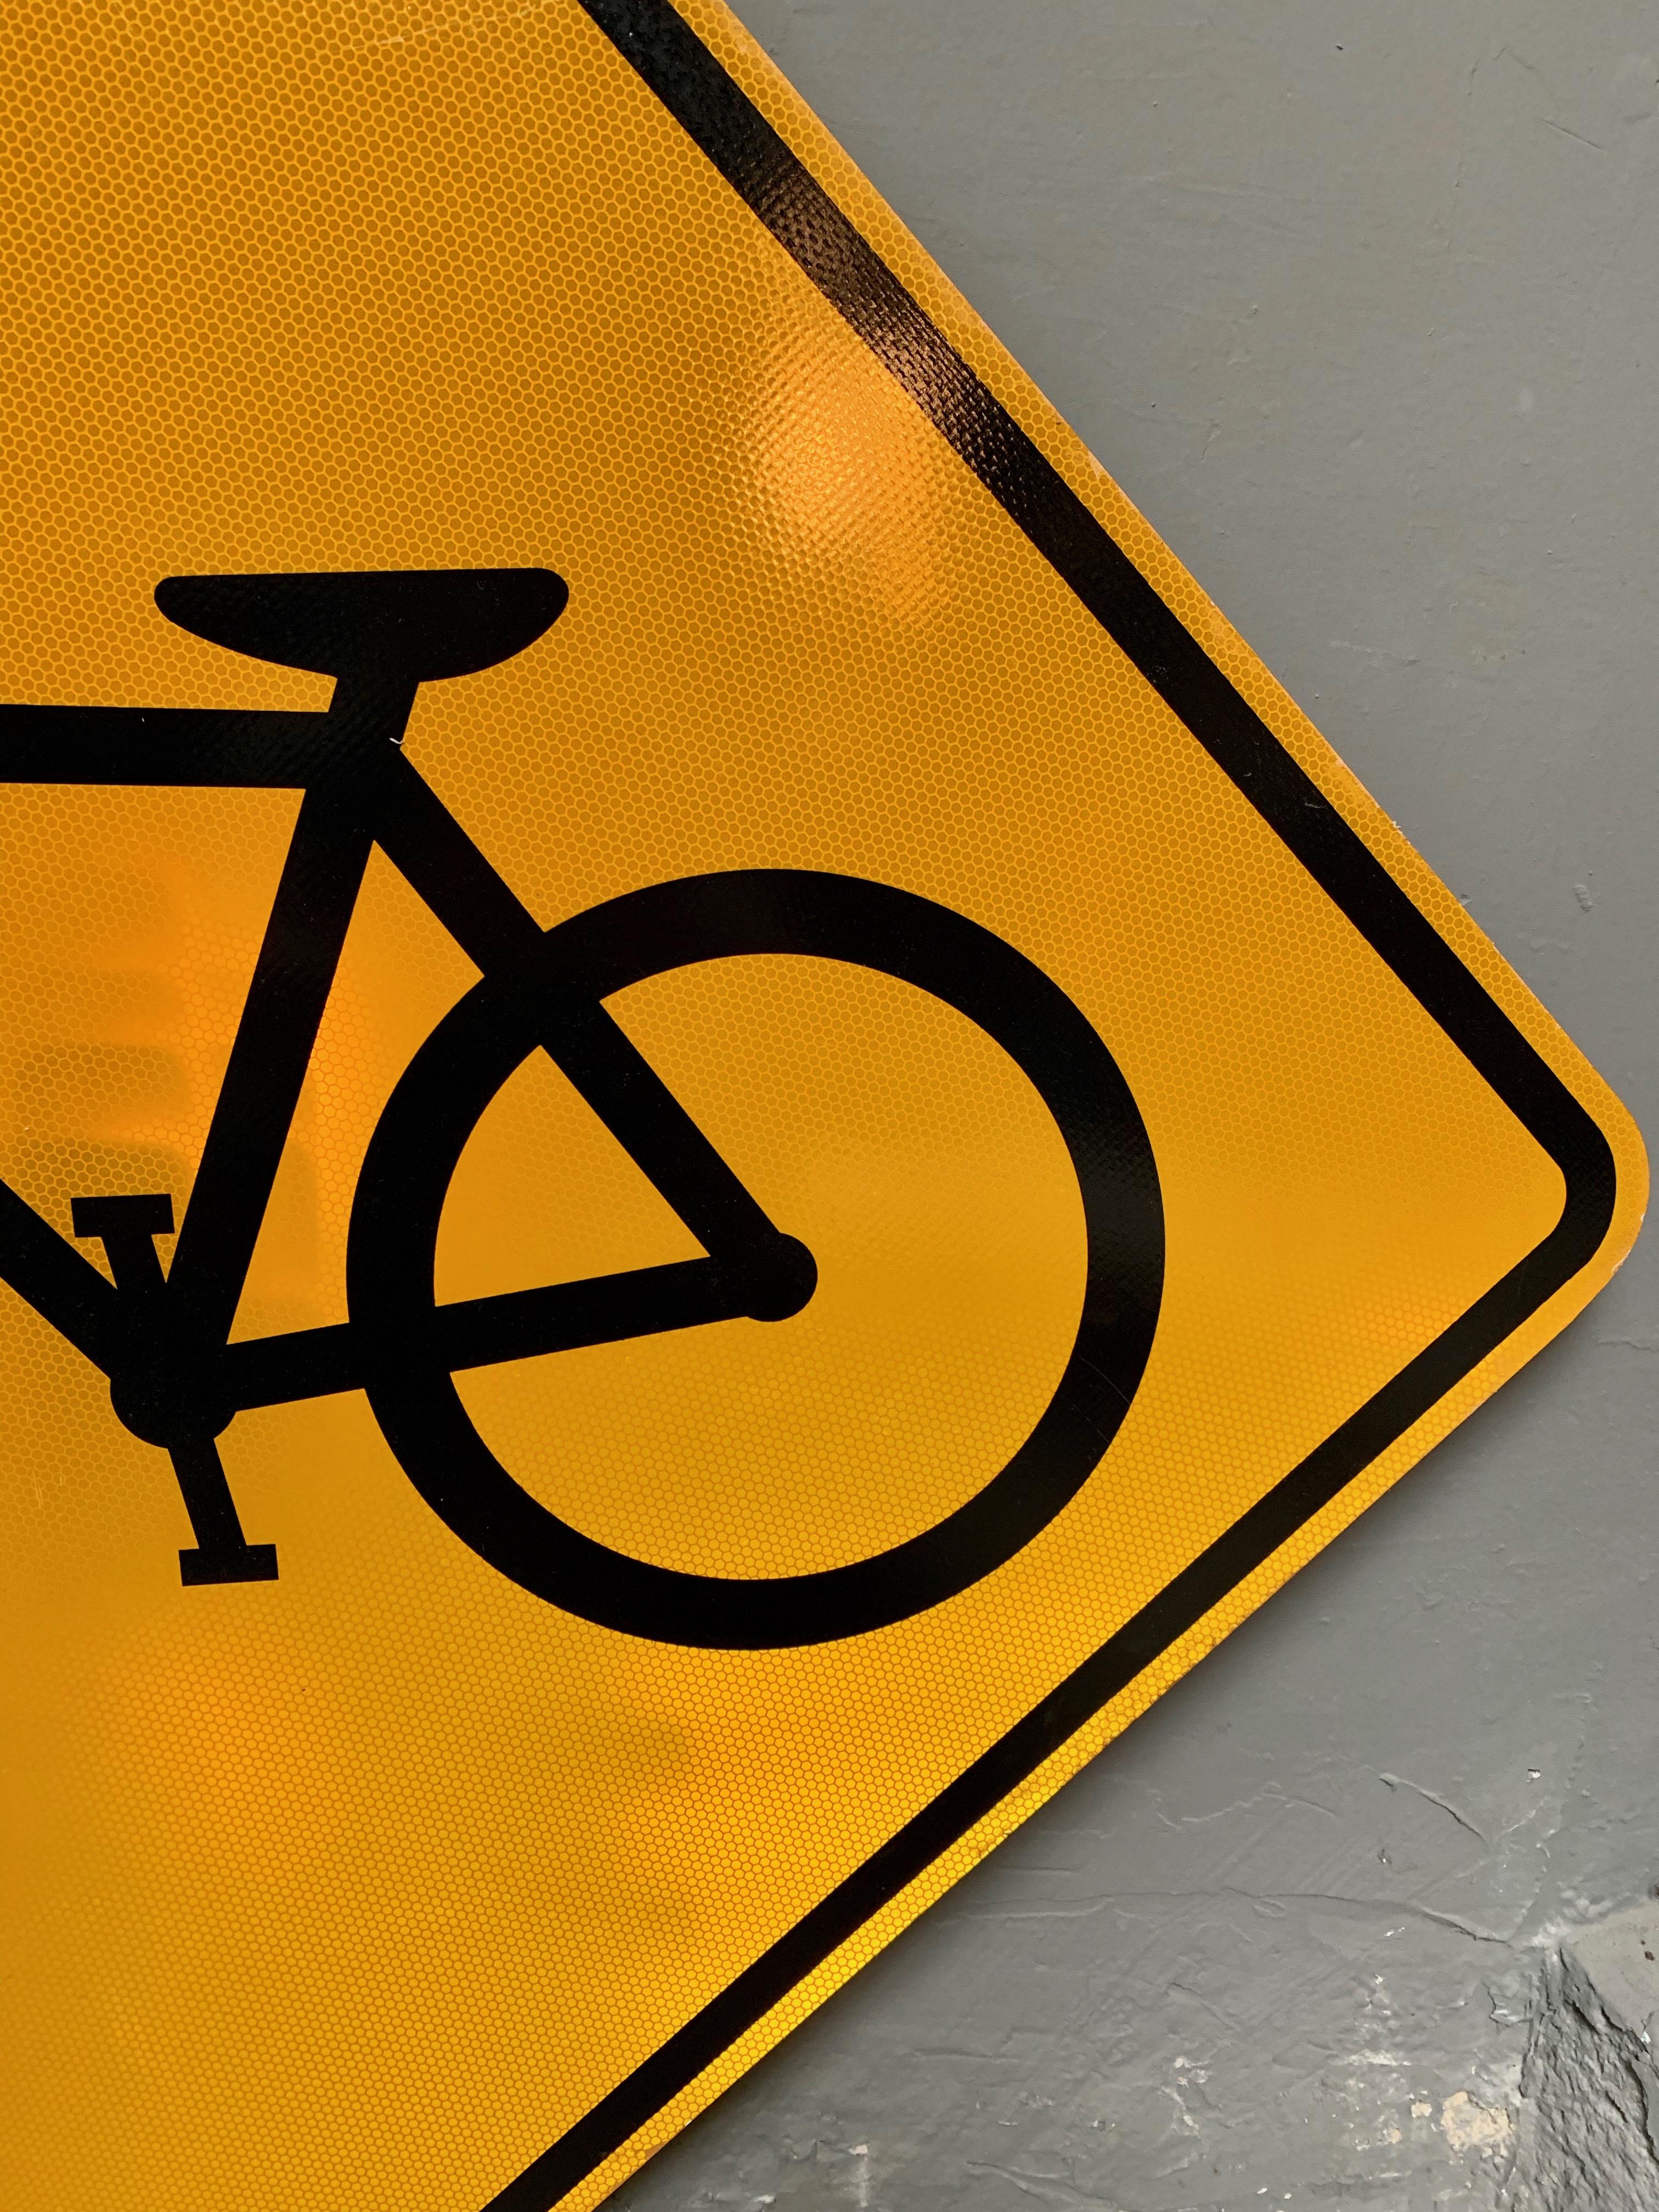 Steel City of Los Angeles Yellow Bike Sign